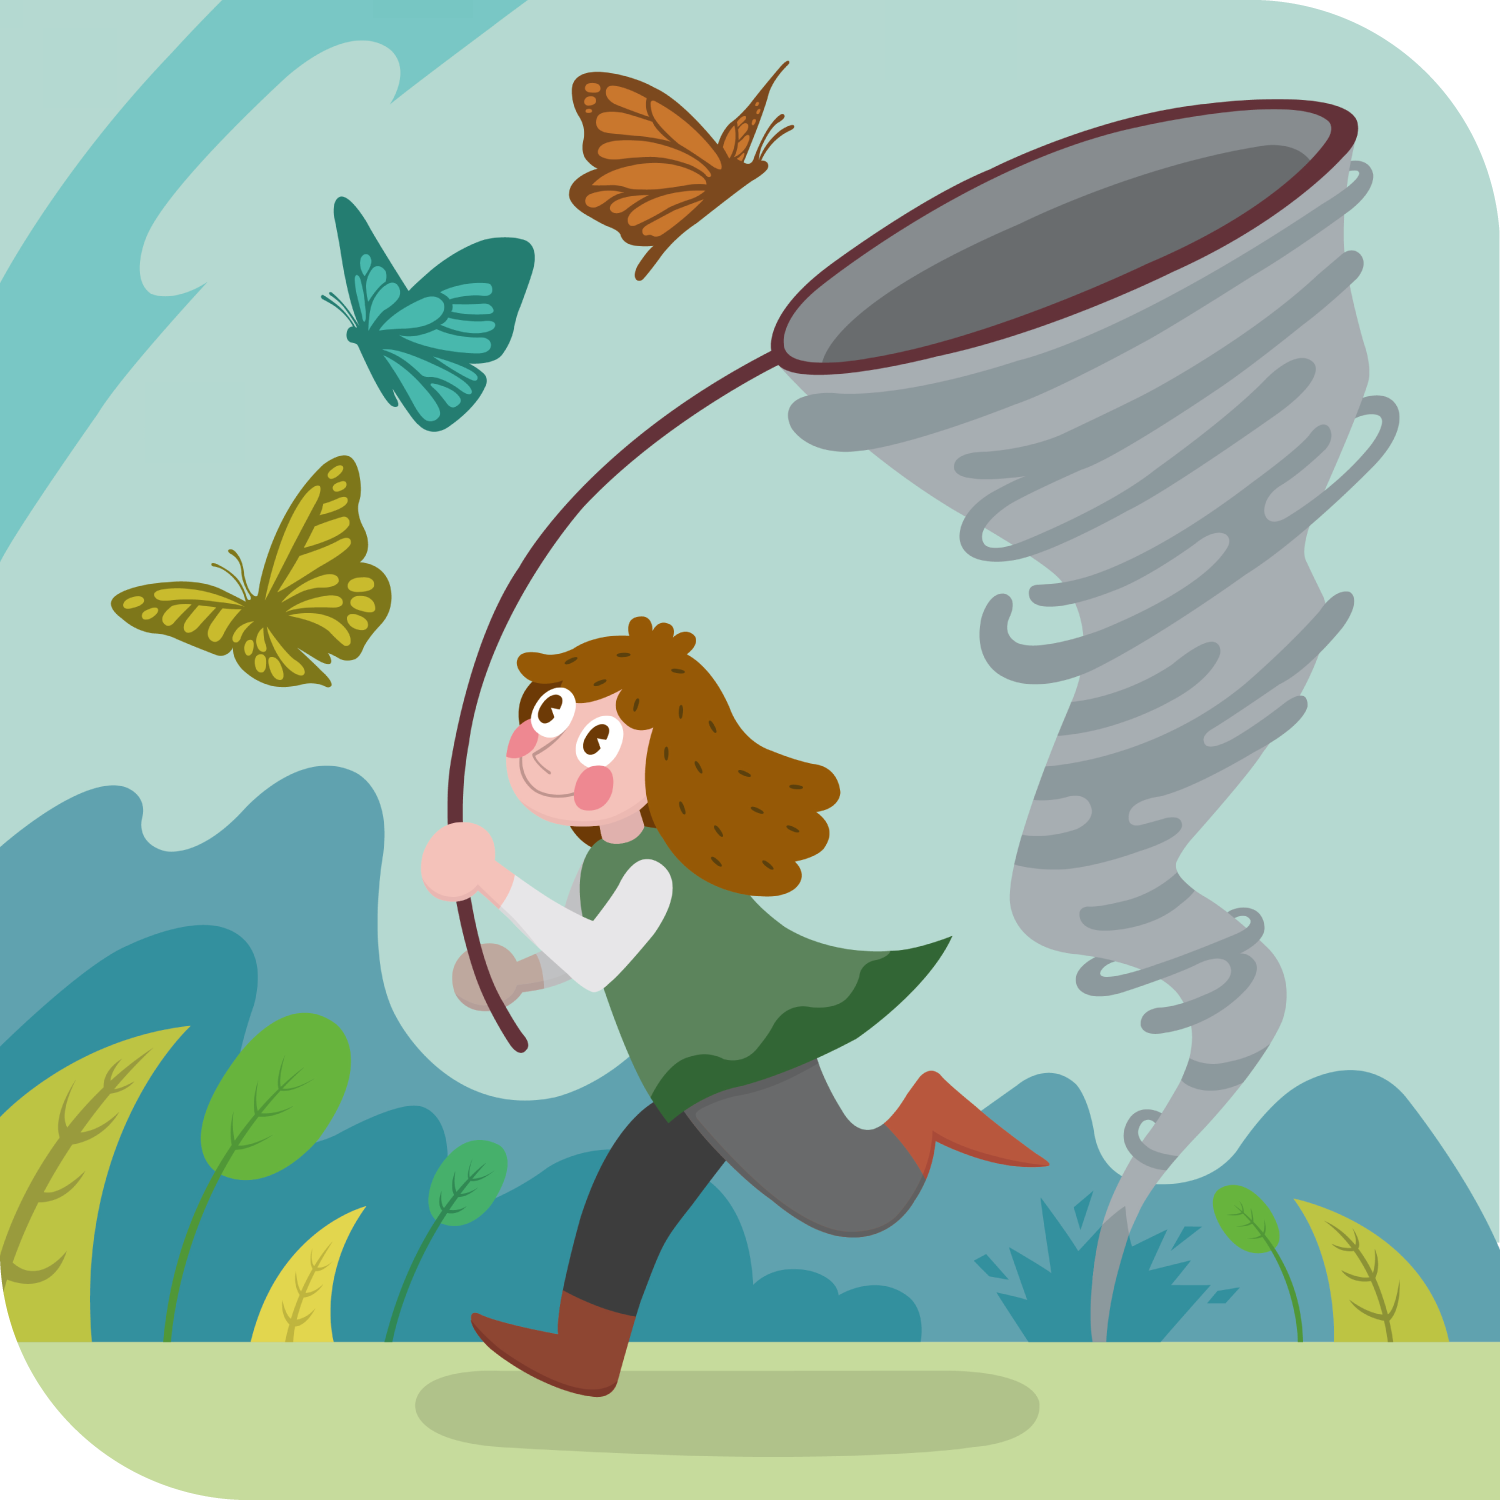 Girl chasing butterflies with tornado net illustration